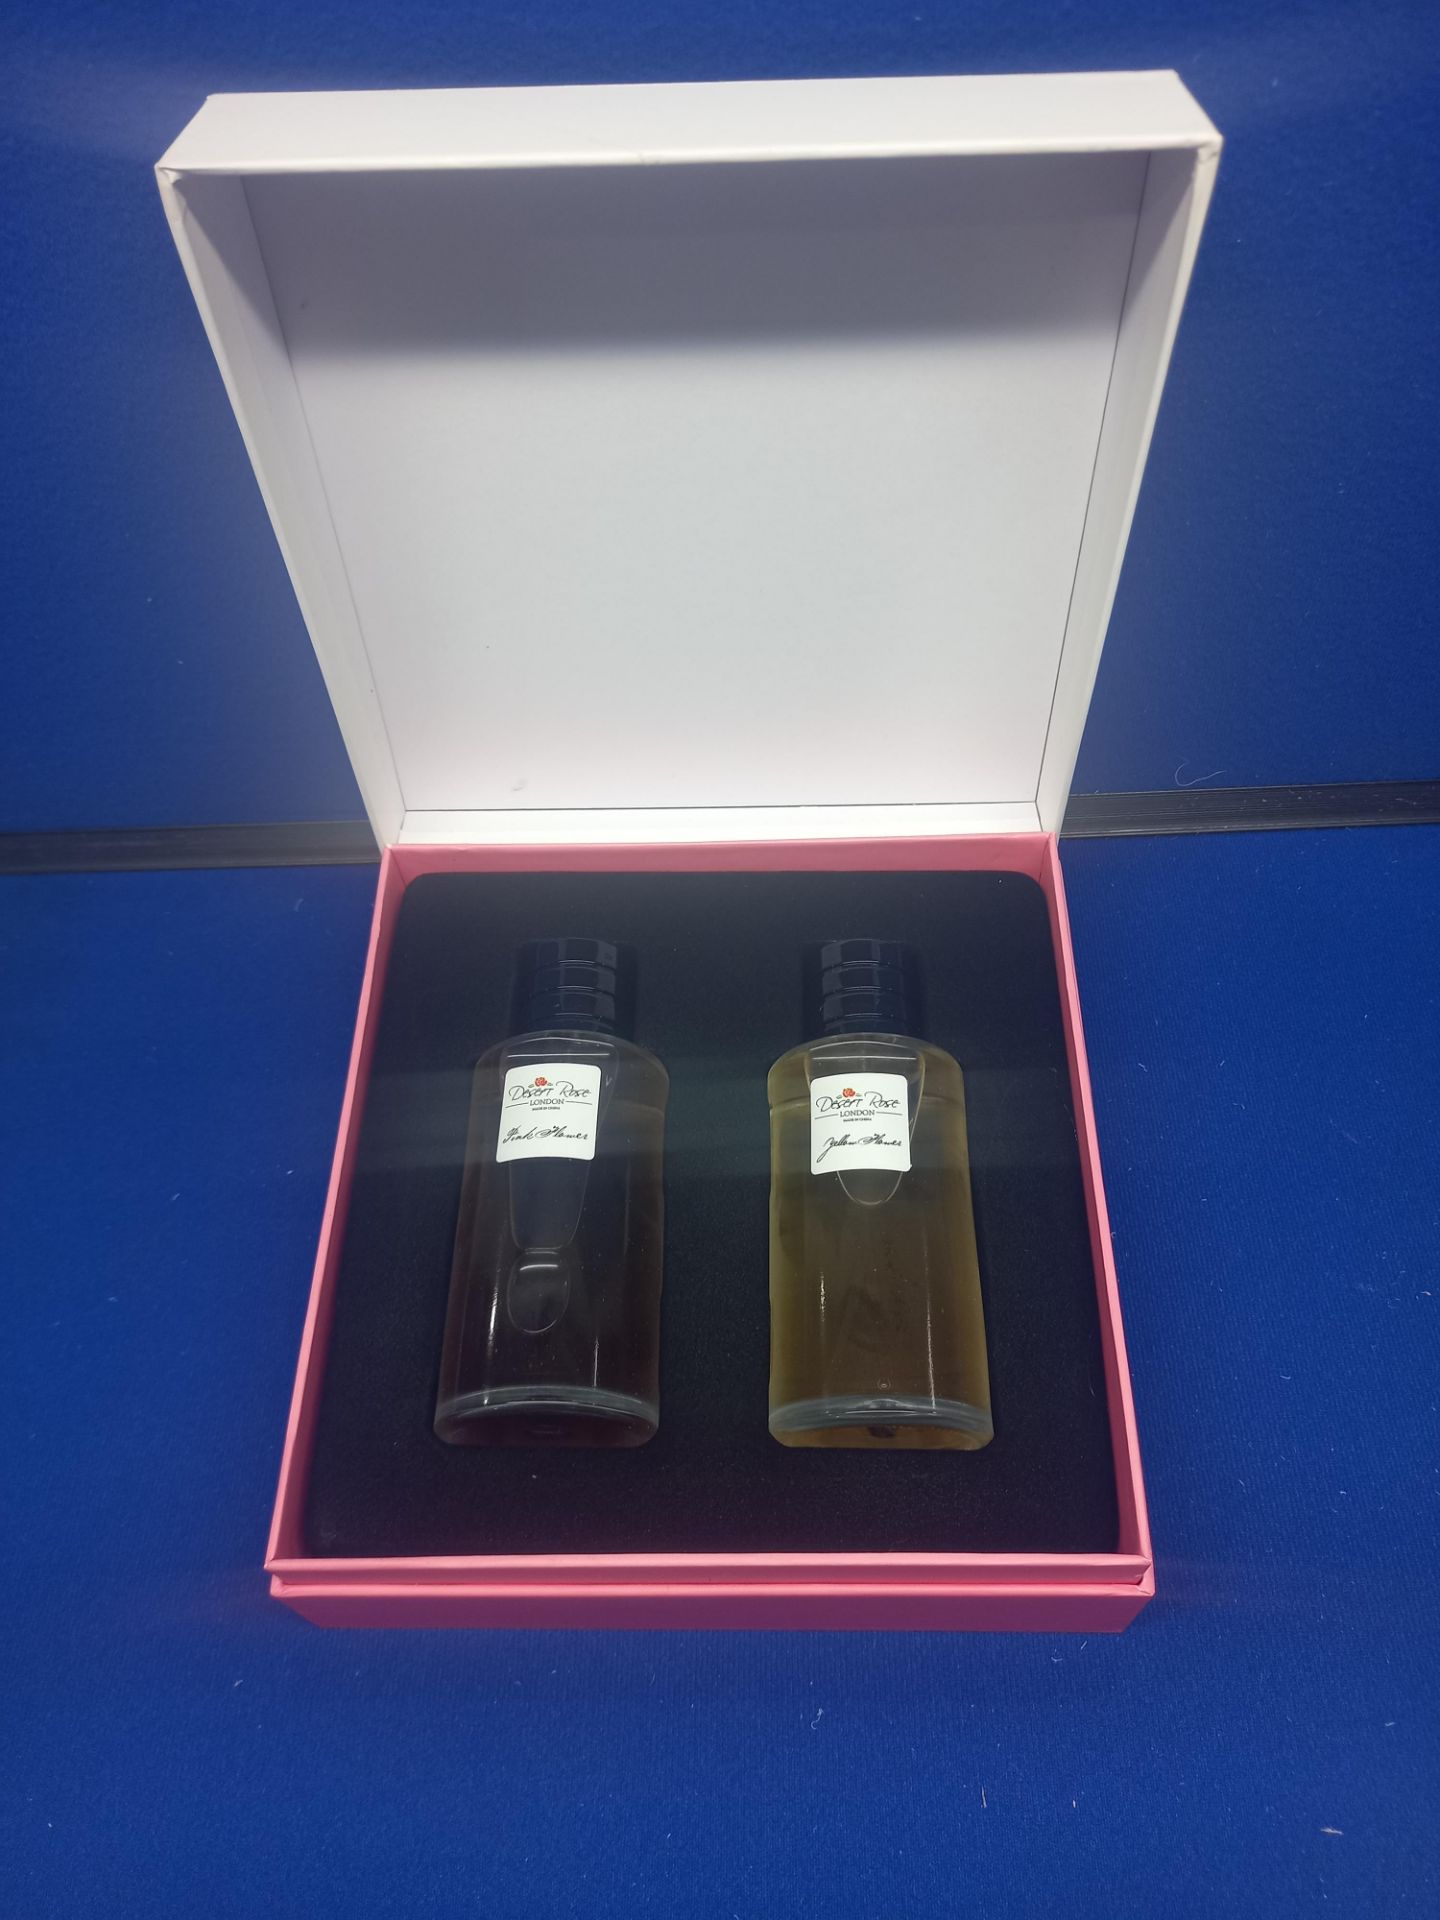 21 x Boxes of Desert Rose Lady's Perfume - 2 Bottles Per Box - Image 2 of 2